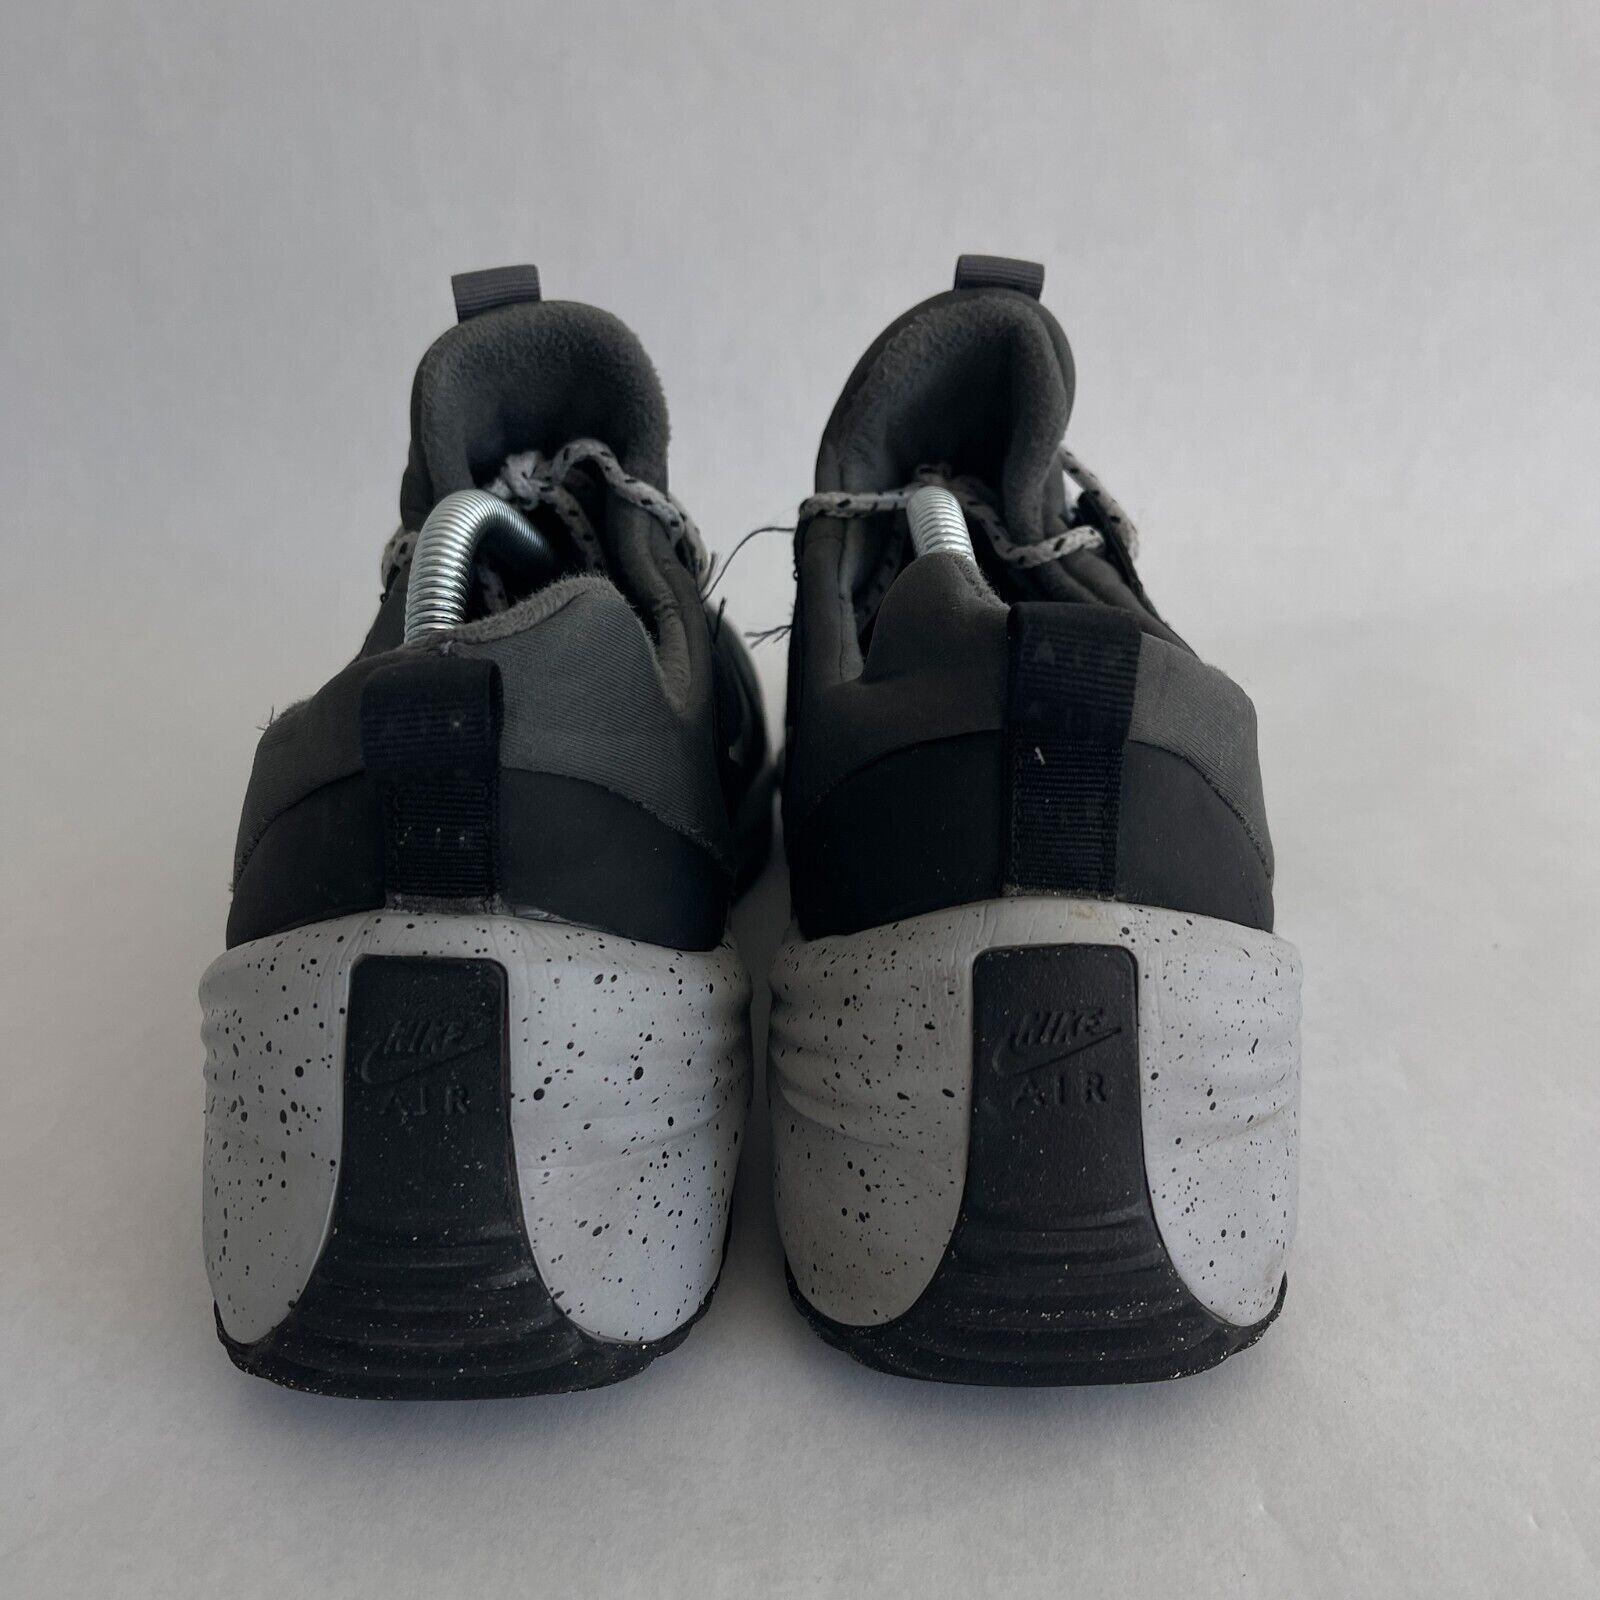 Nike Air Jordan Flight SC-3 Mens Size 8.5 White Red Shoes Sneakers 629877-116